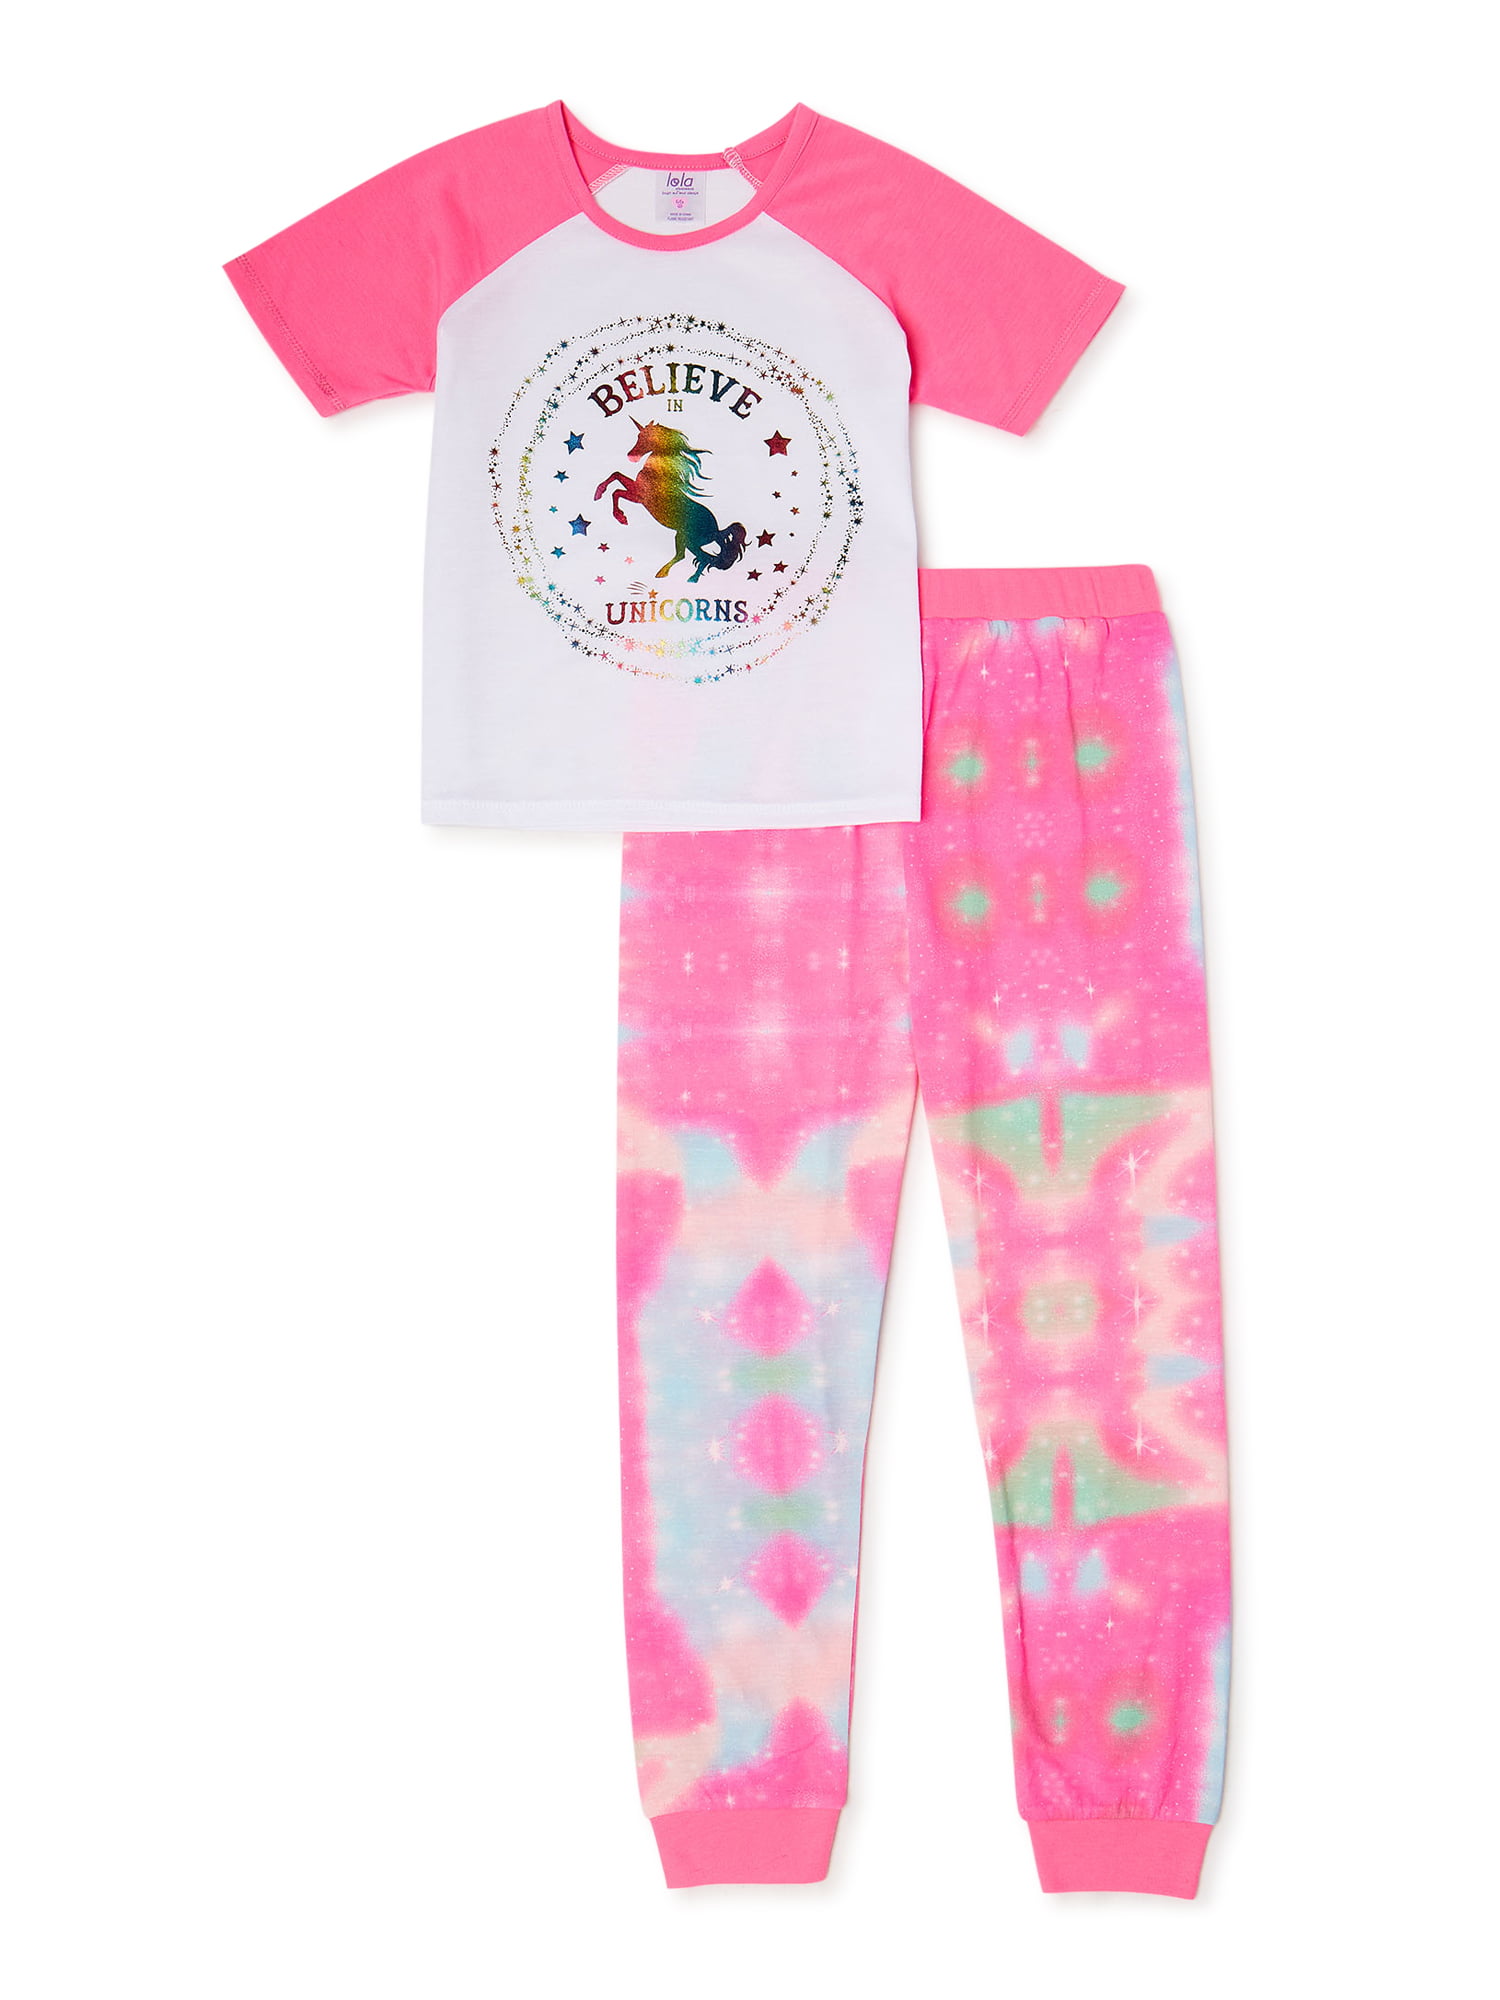 LOLA Girls Short Sleeve Top and Pants, 2-Piece Pajama Set, Sizes 4-16 ...